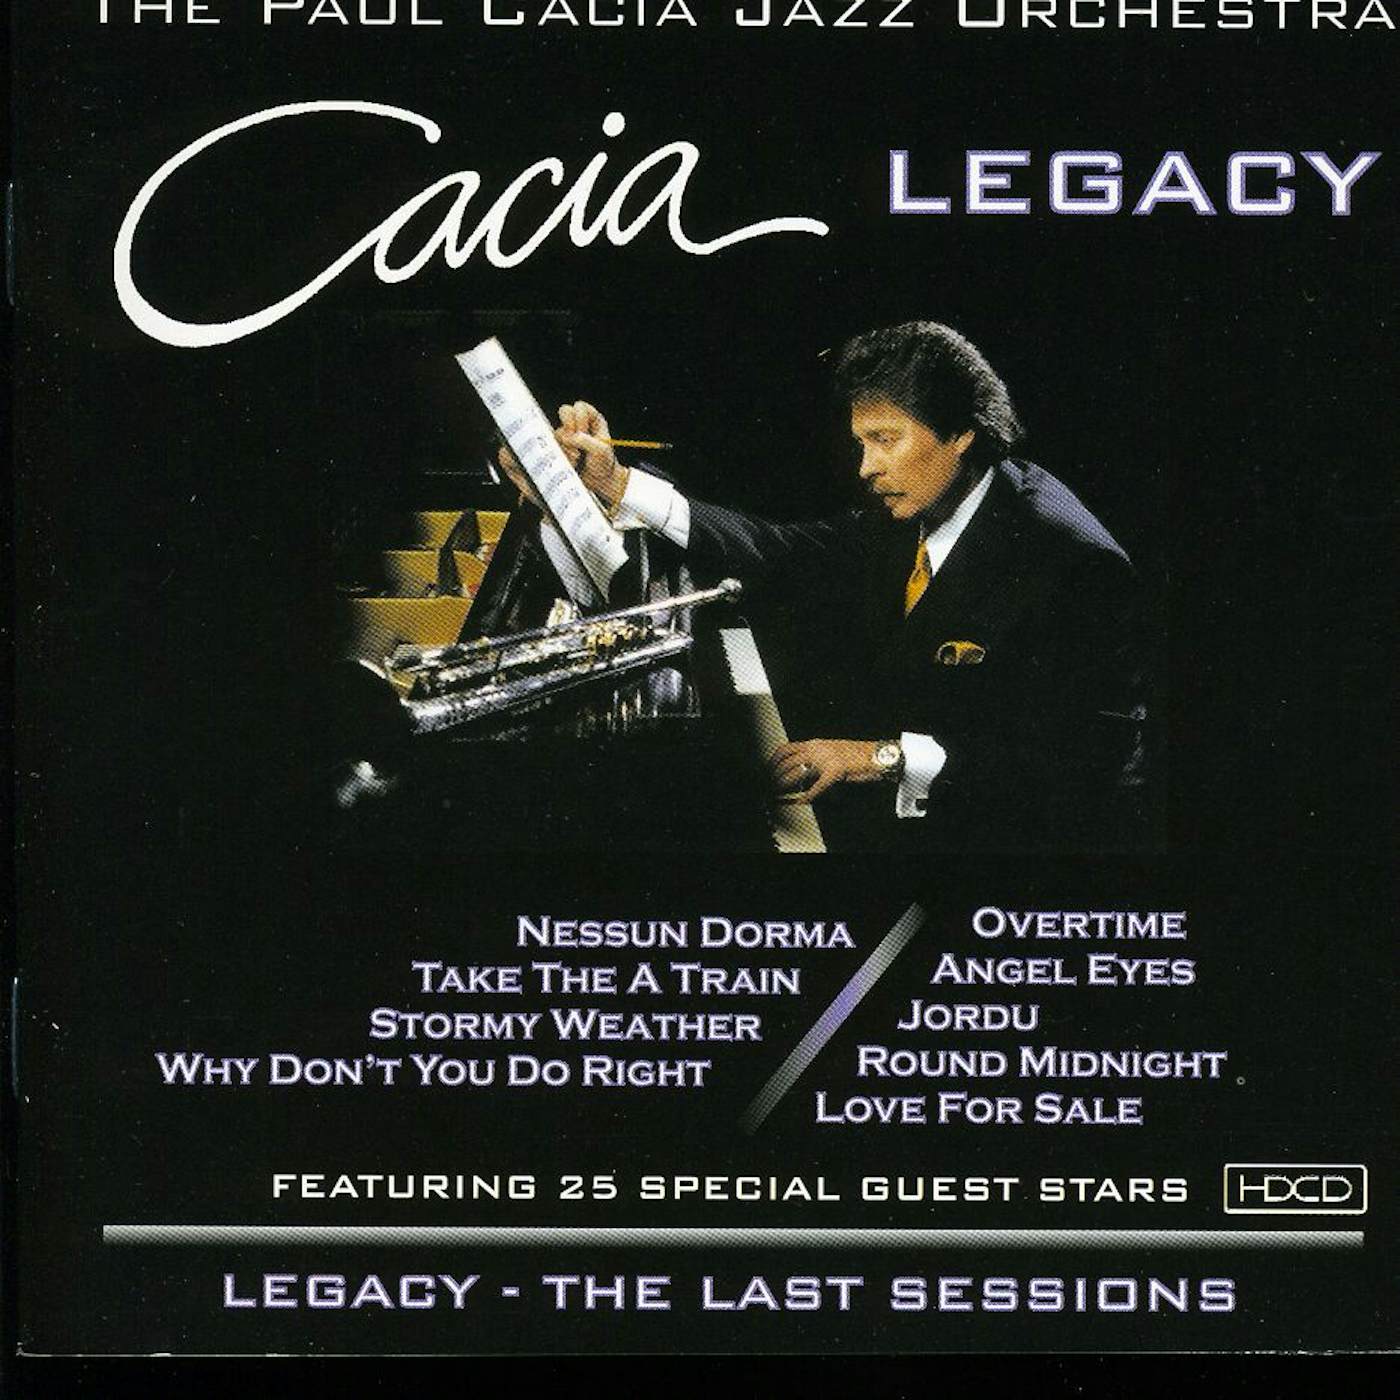 Paul Cacia LEGACY: LAST SESSIONS CD